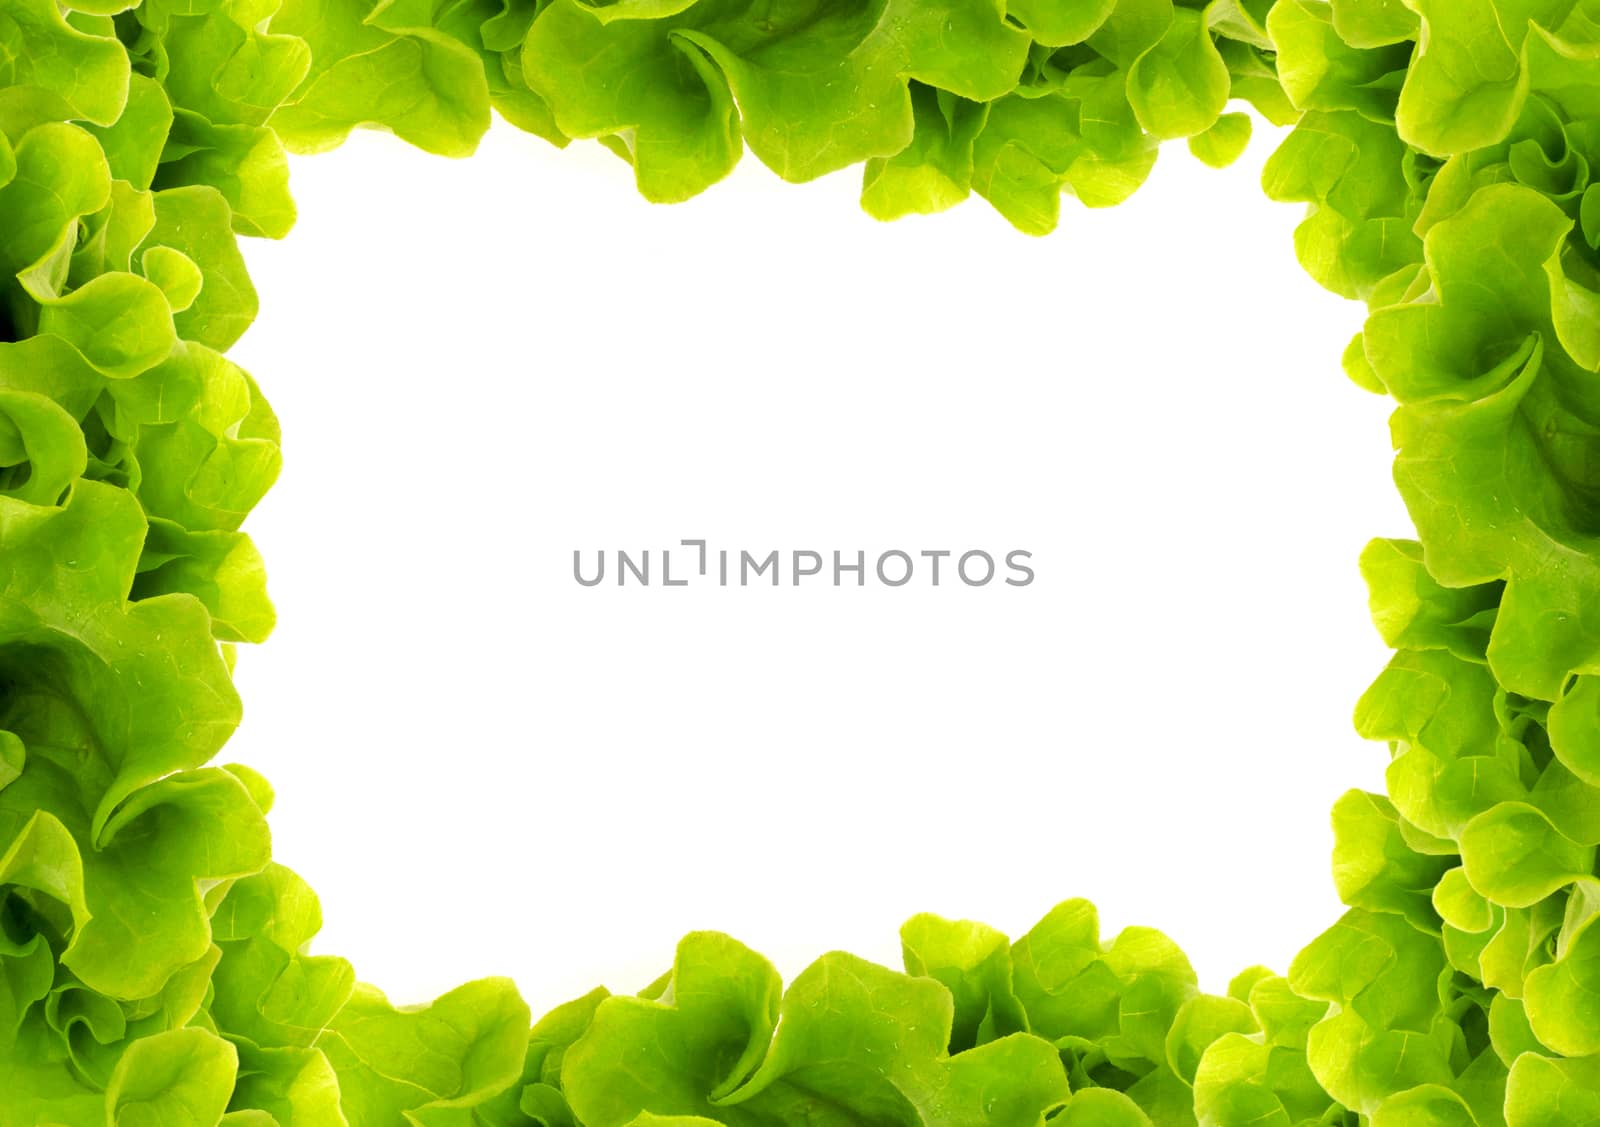 Frash green salad frame on white background